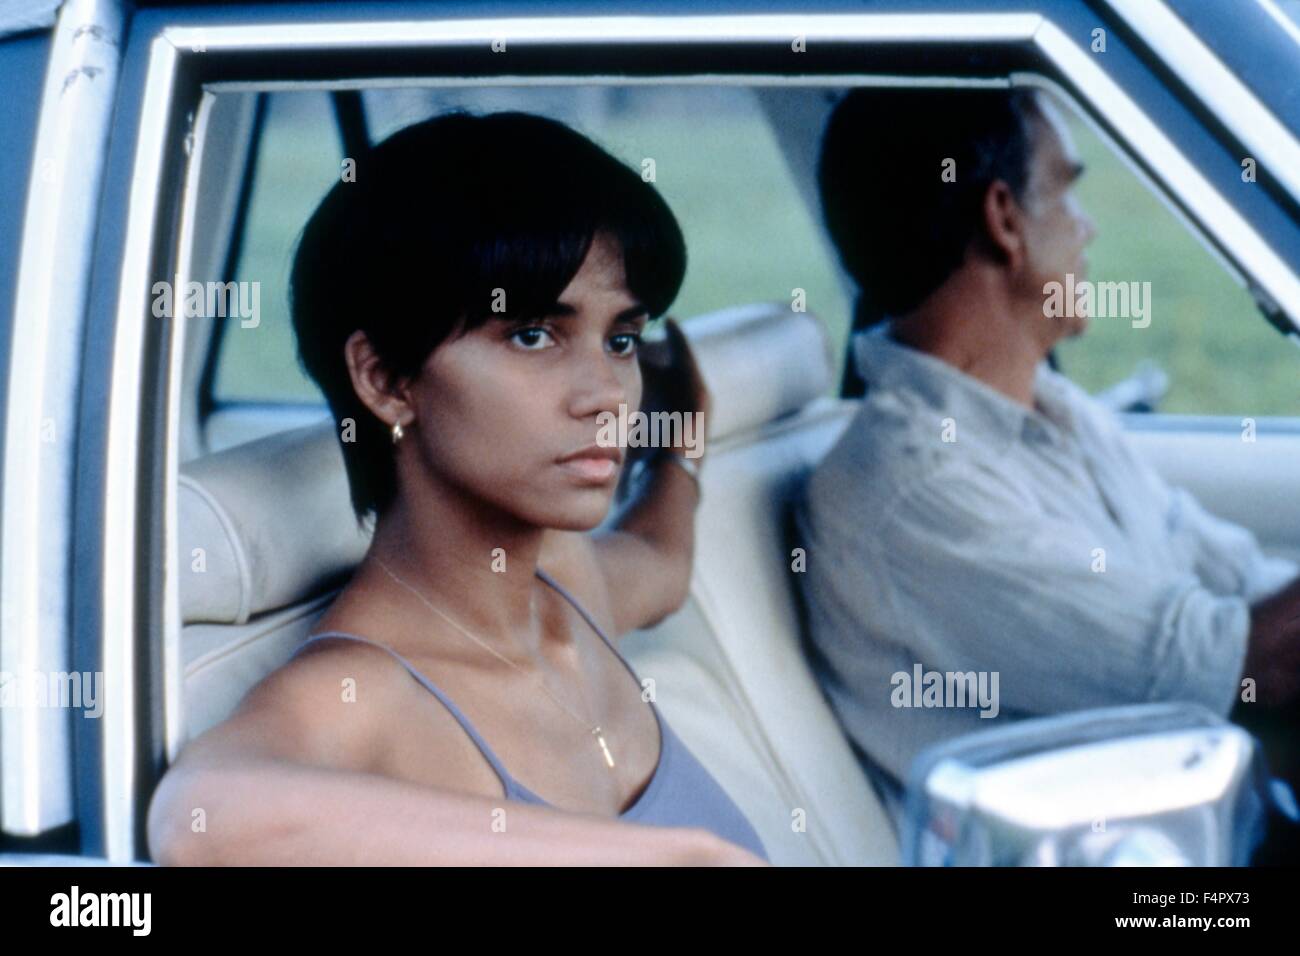 Halle Berry y Billy Bob Thornton / Monster's Ball / 2001 / dirigido por Marc Forster / [Lions Gate Films] Foto de stock